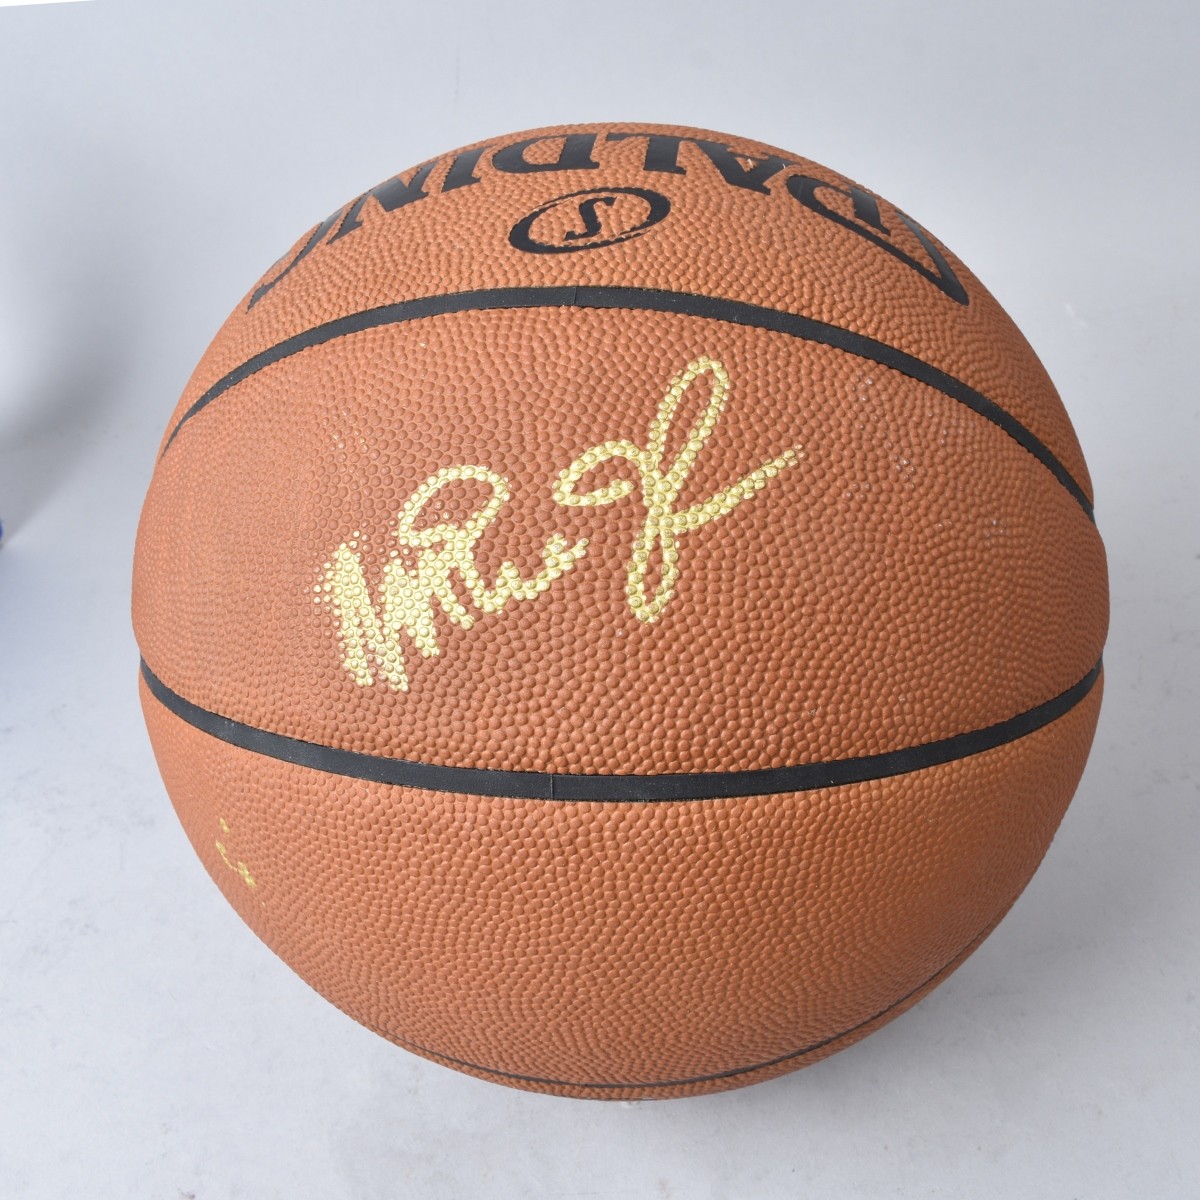 NBA Basketball signed by Magic Johnson